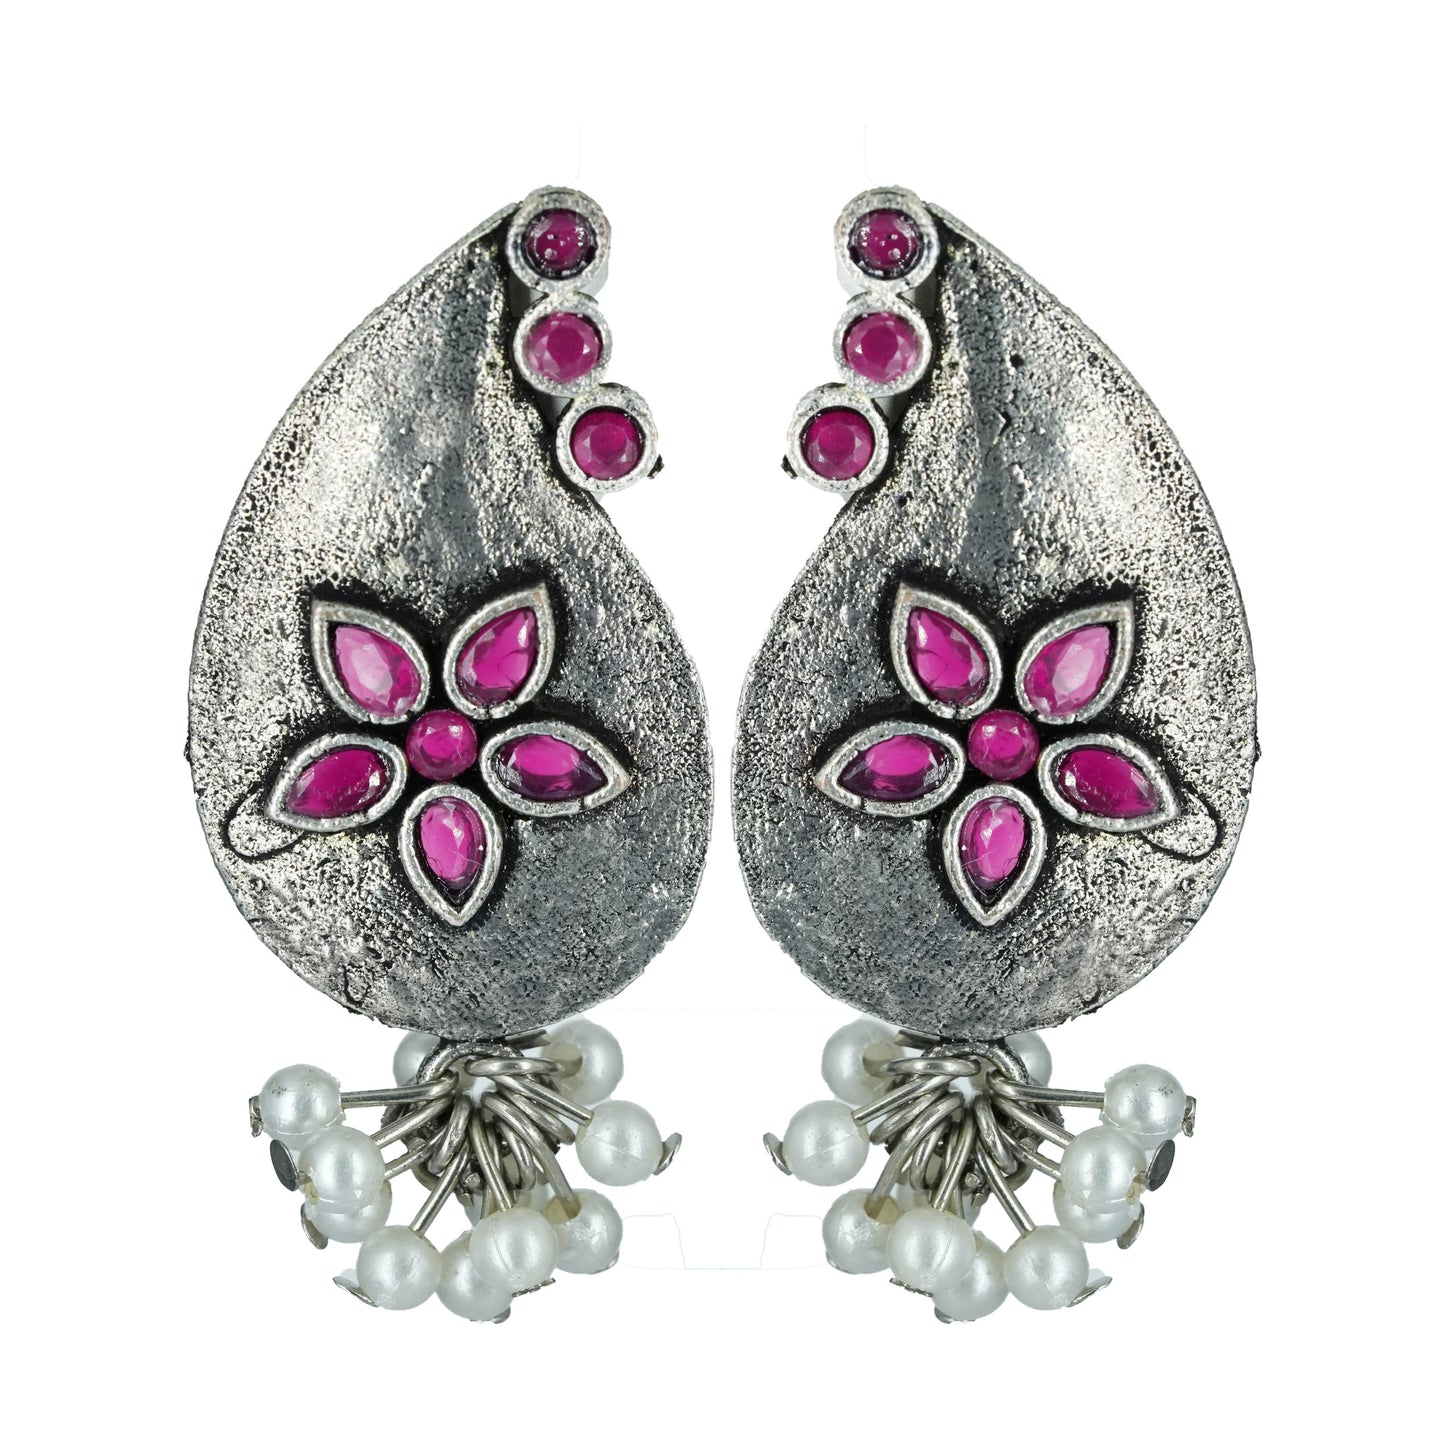 Oxidized Stone Studs Earrings